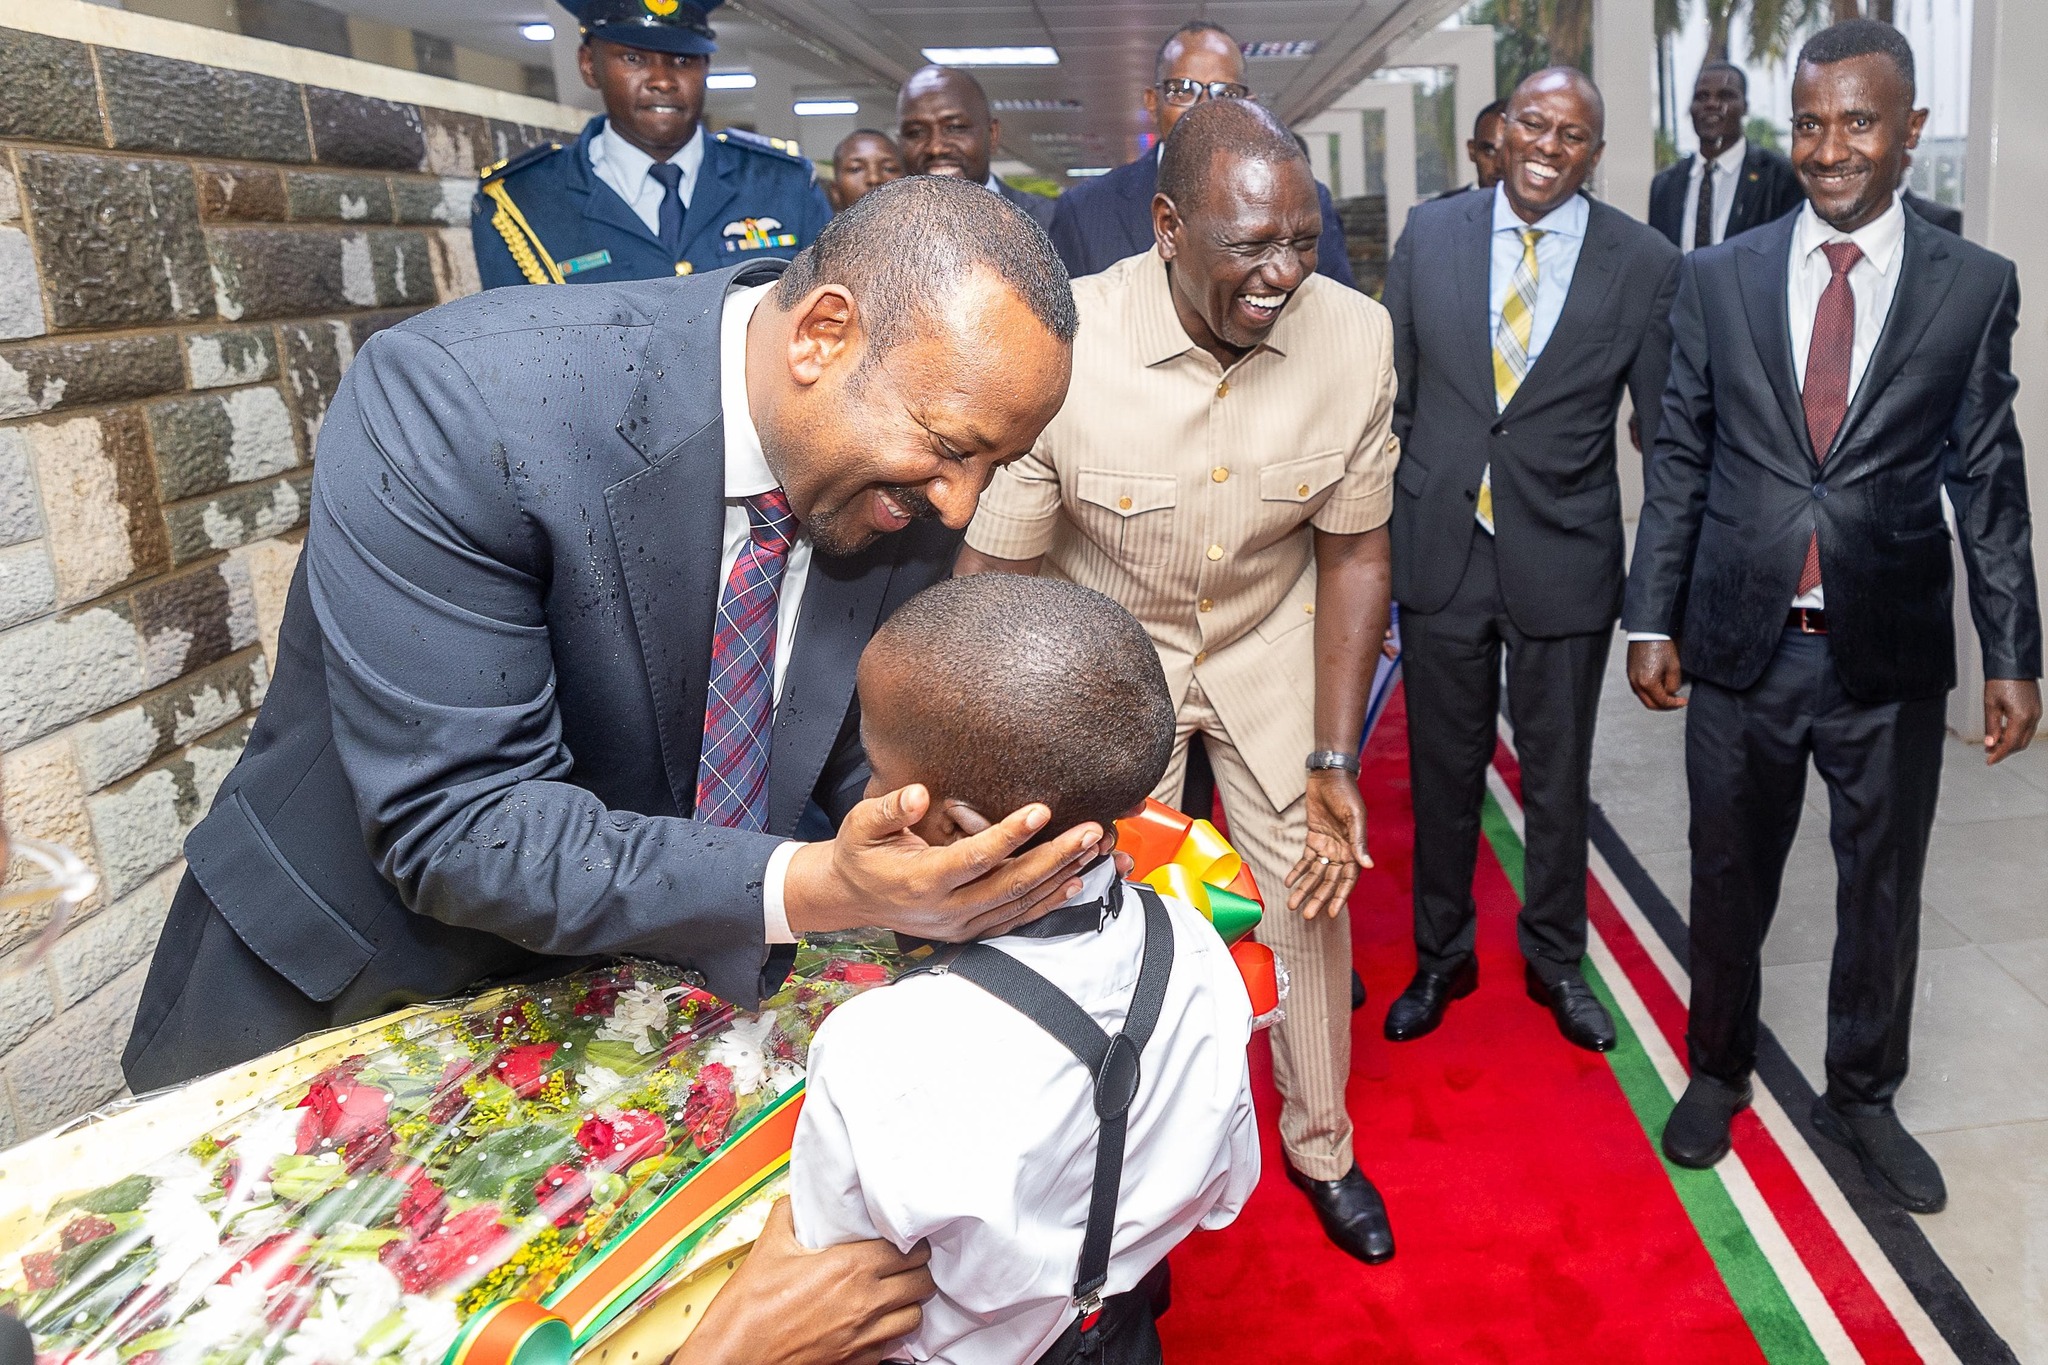 Ethiopian Prime Minister Abiy Ahmed in Kenya for State Visit